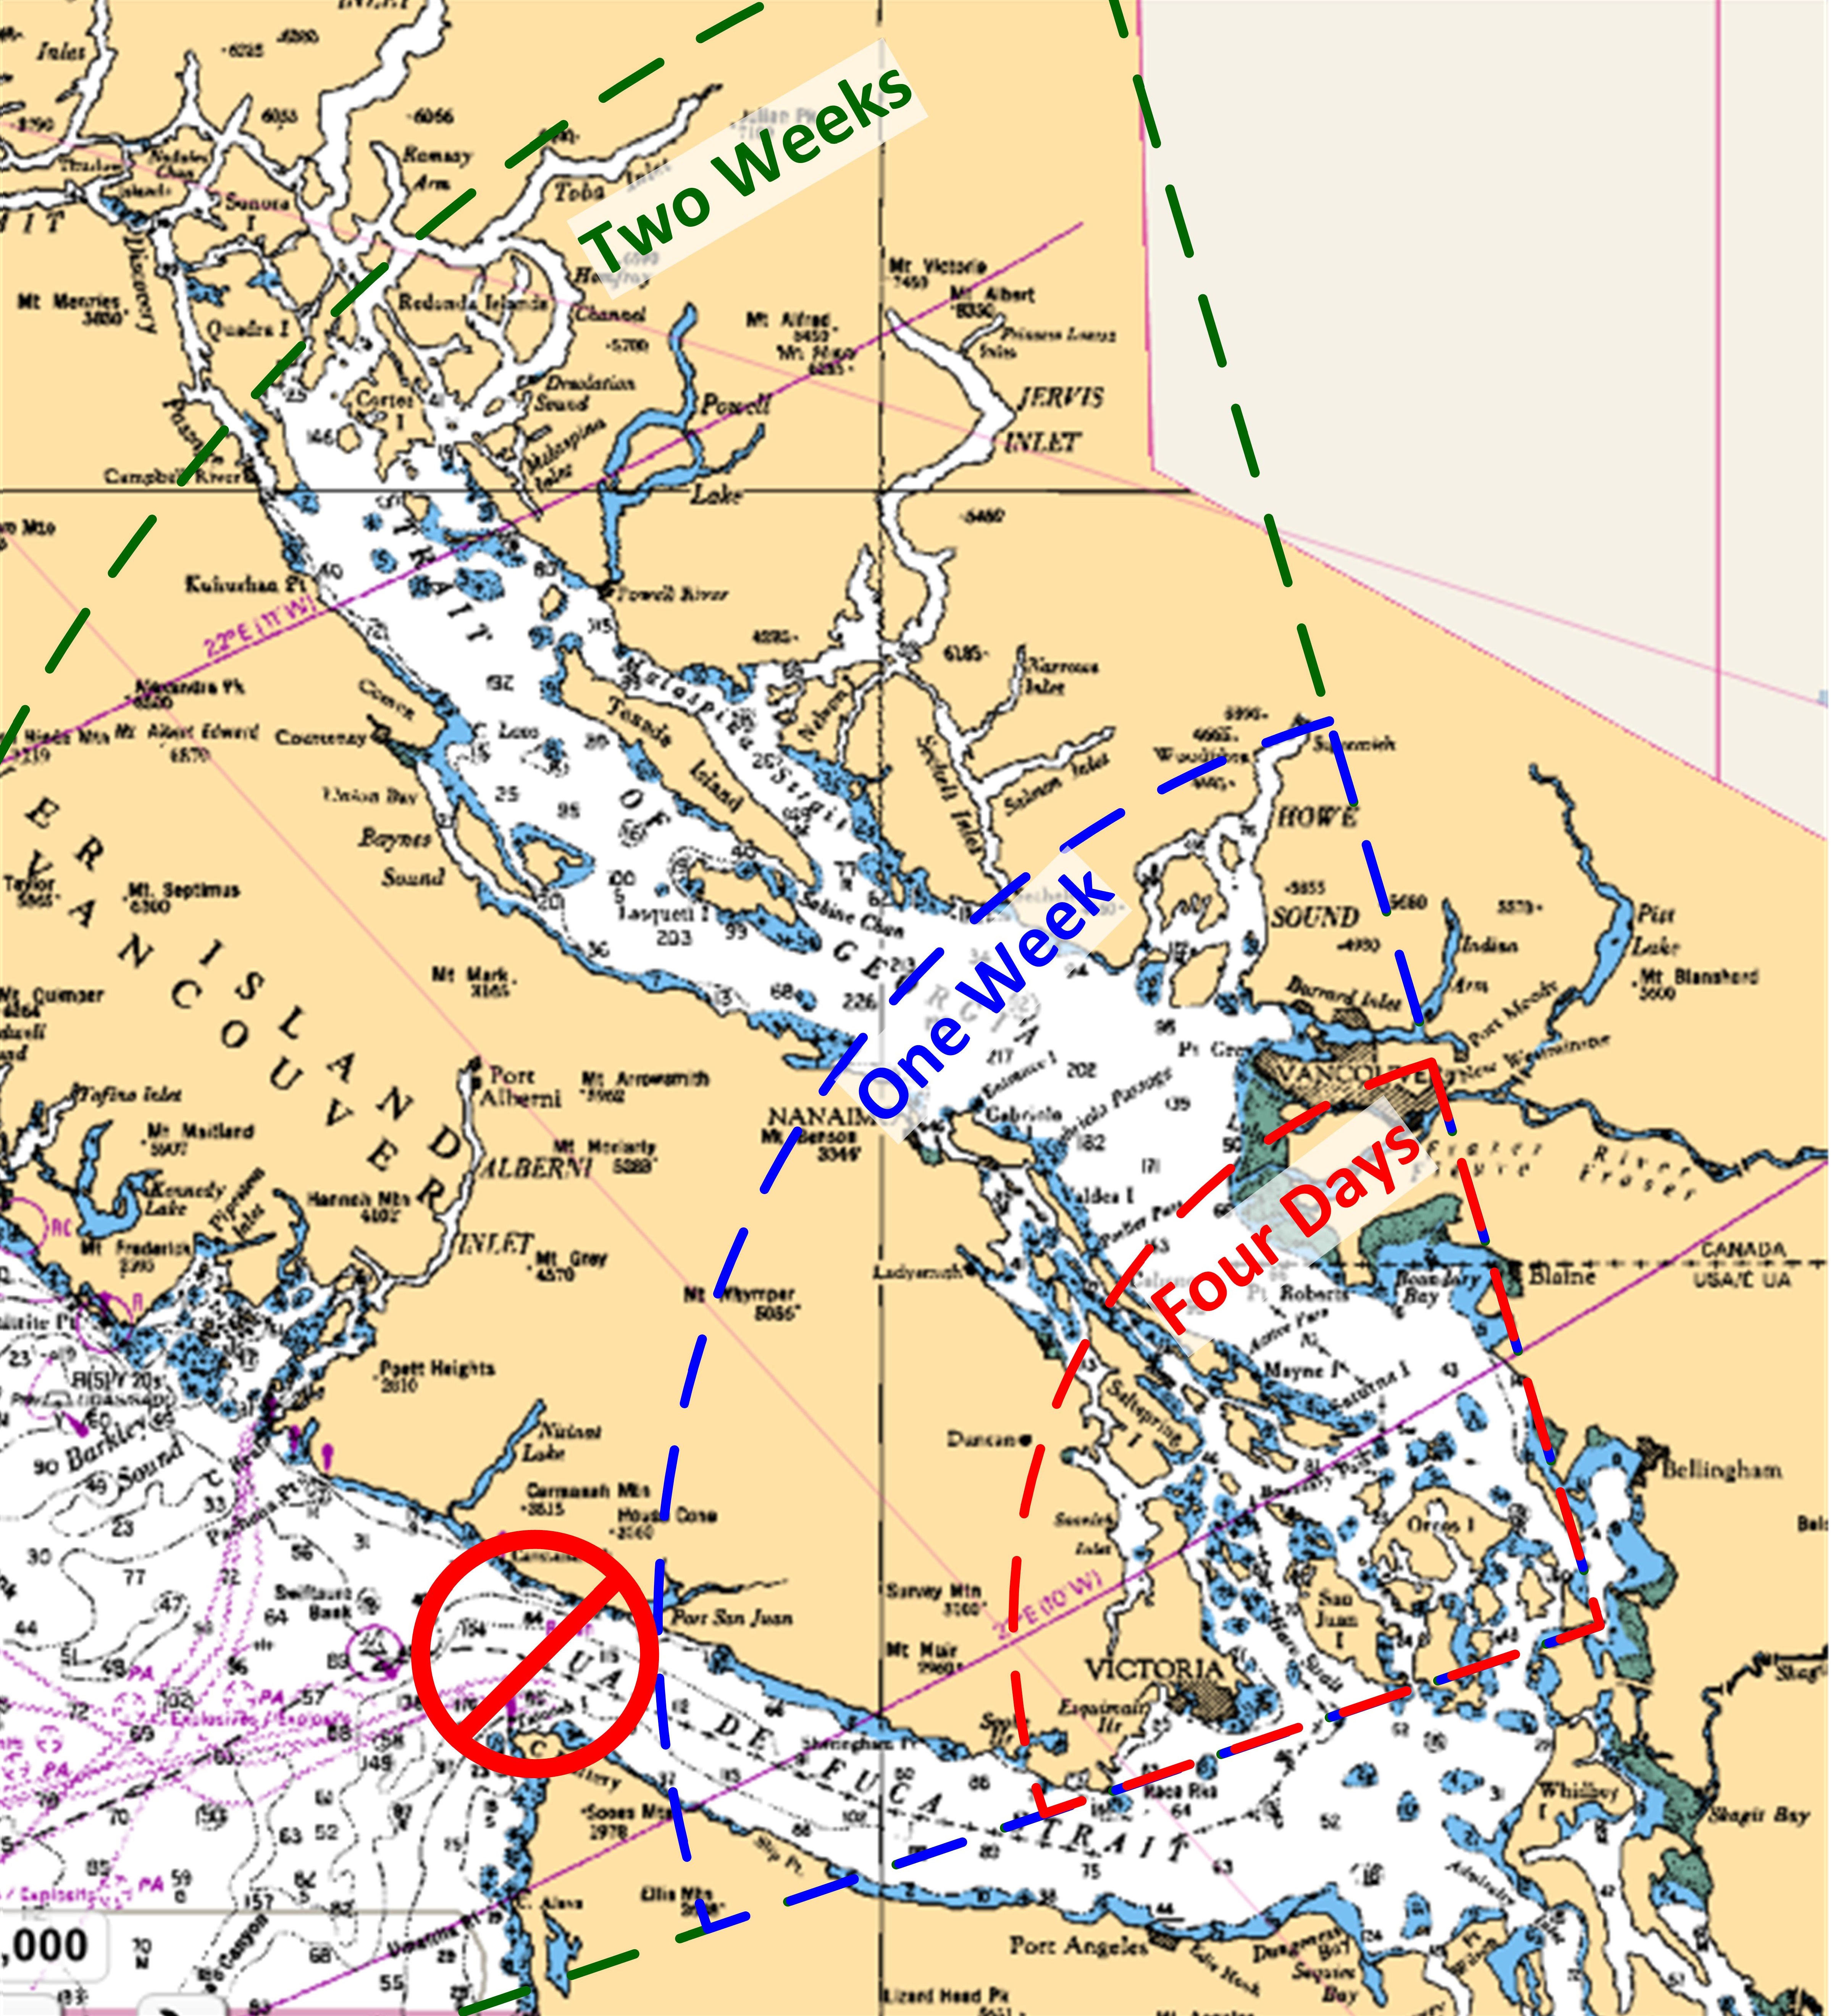 Saanich Inlet Depth Chart